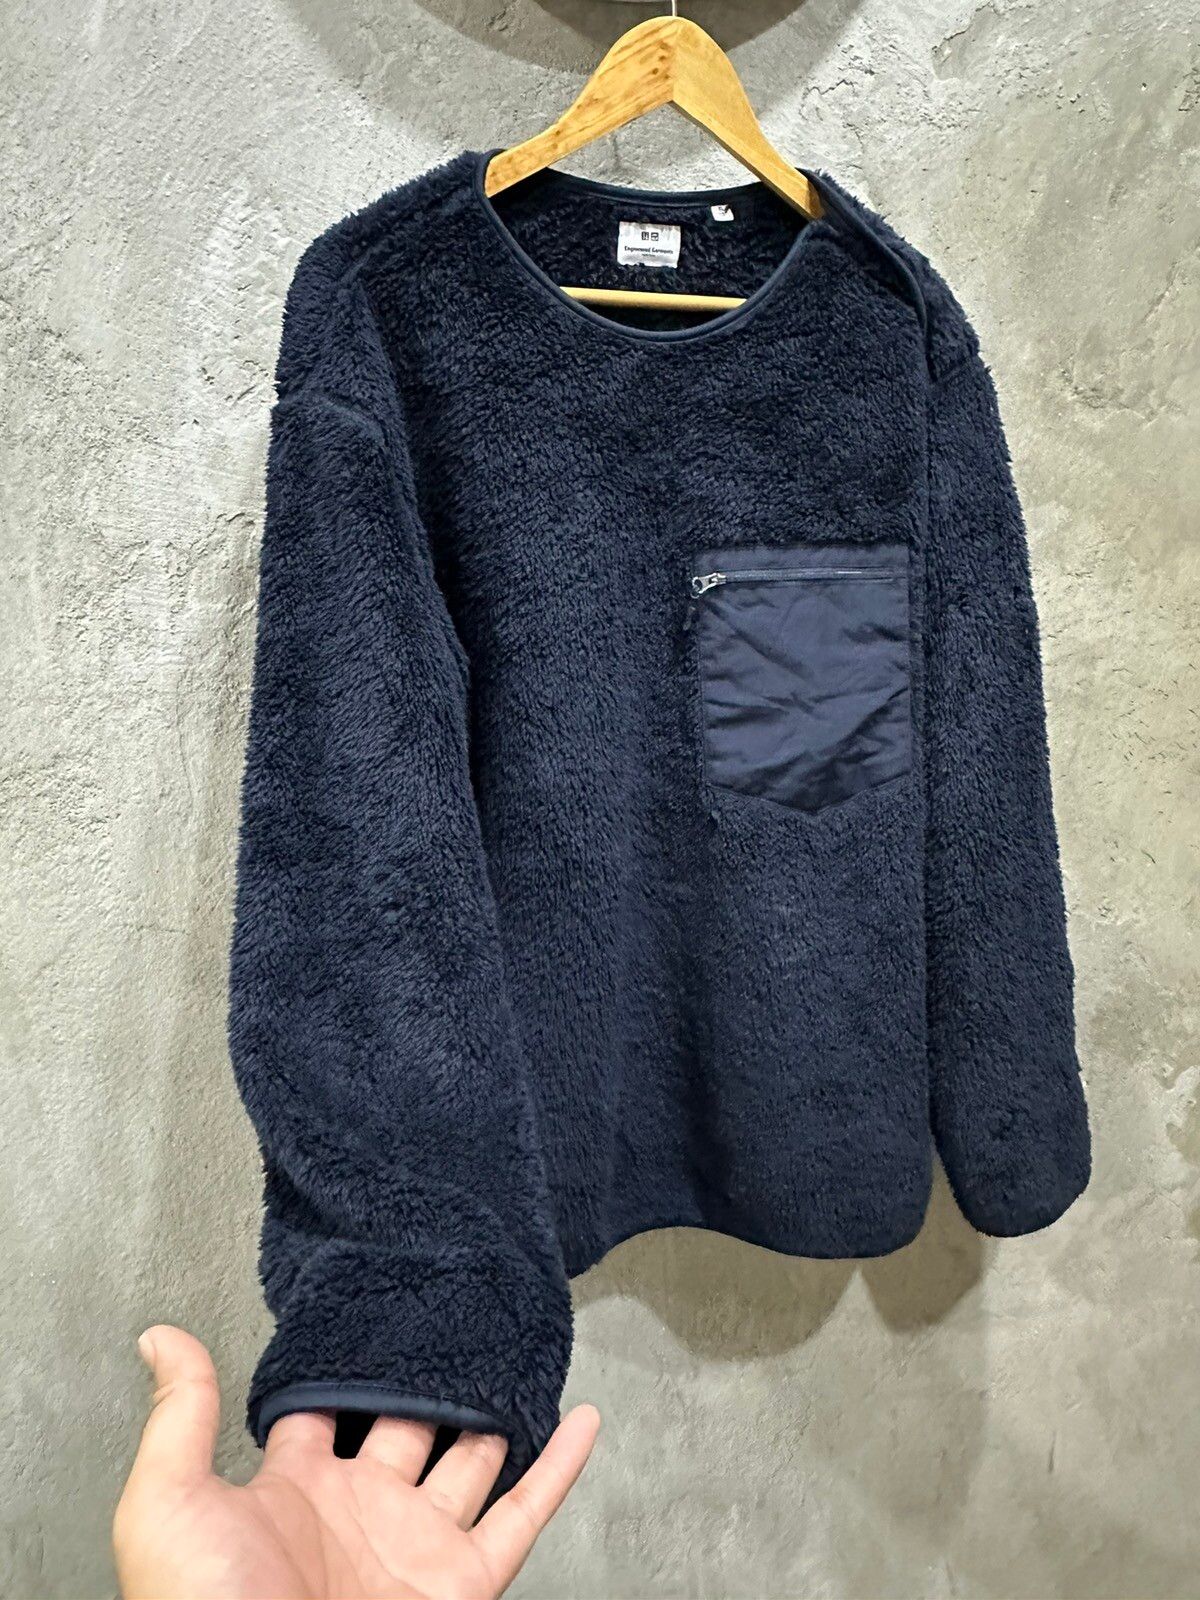 Uniqlo x Engineered Garments Fleece Pullover Navy - 6